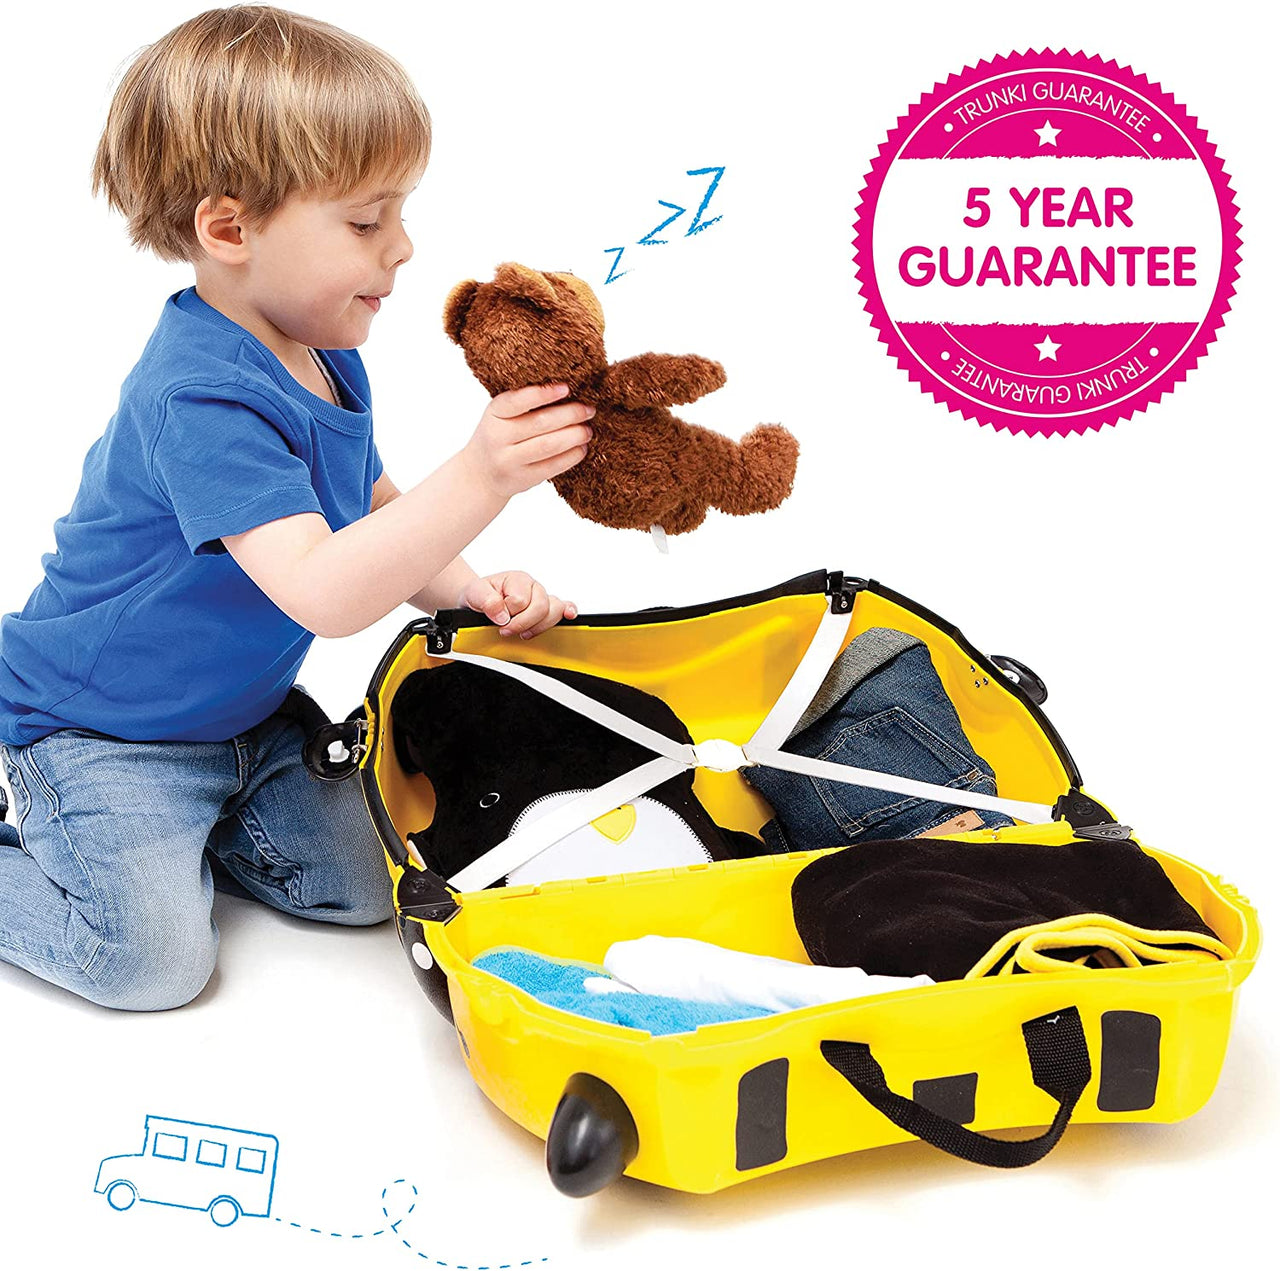 Ride-on kids suitcase - Bernard The Bee